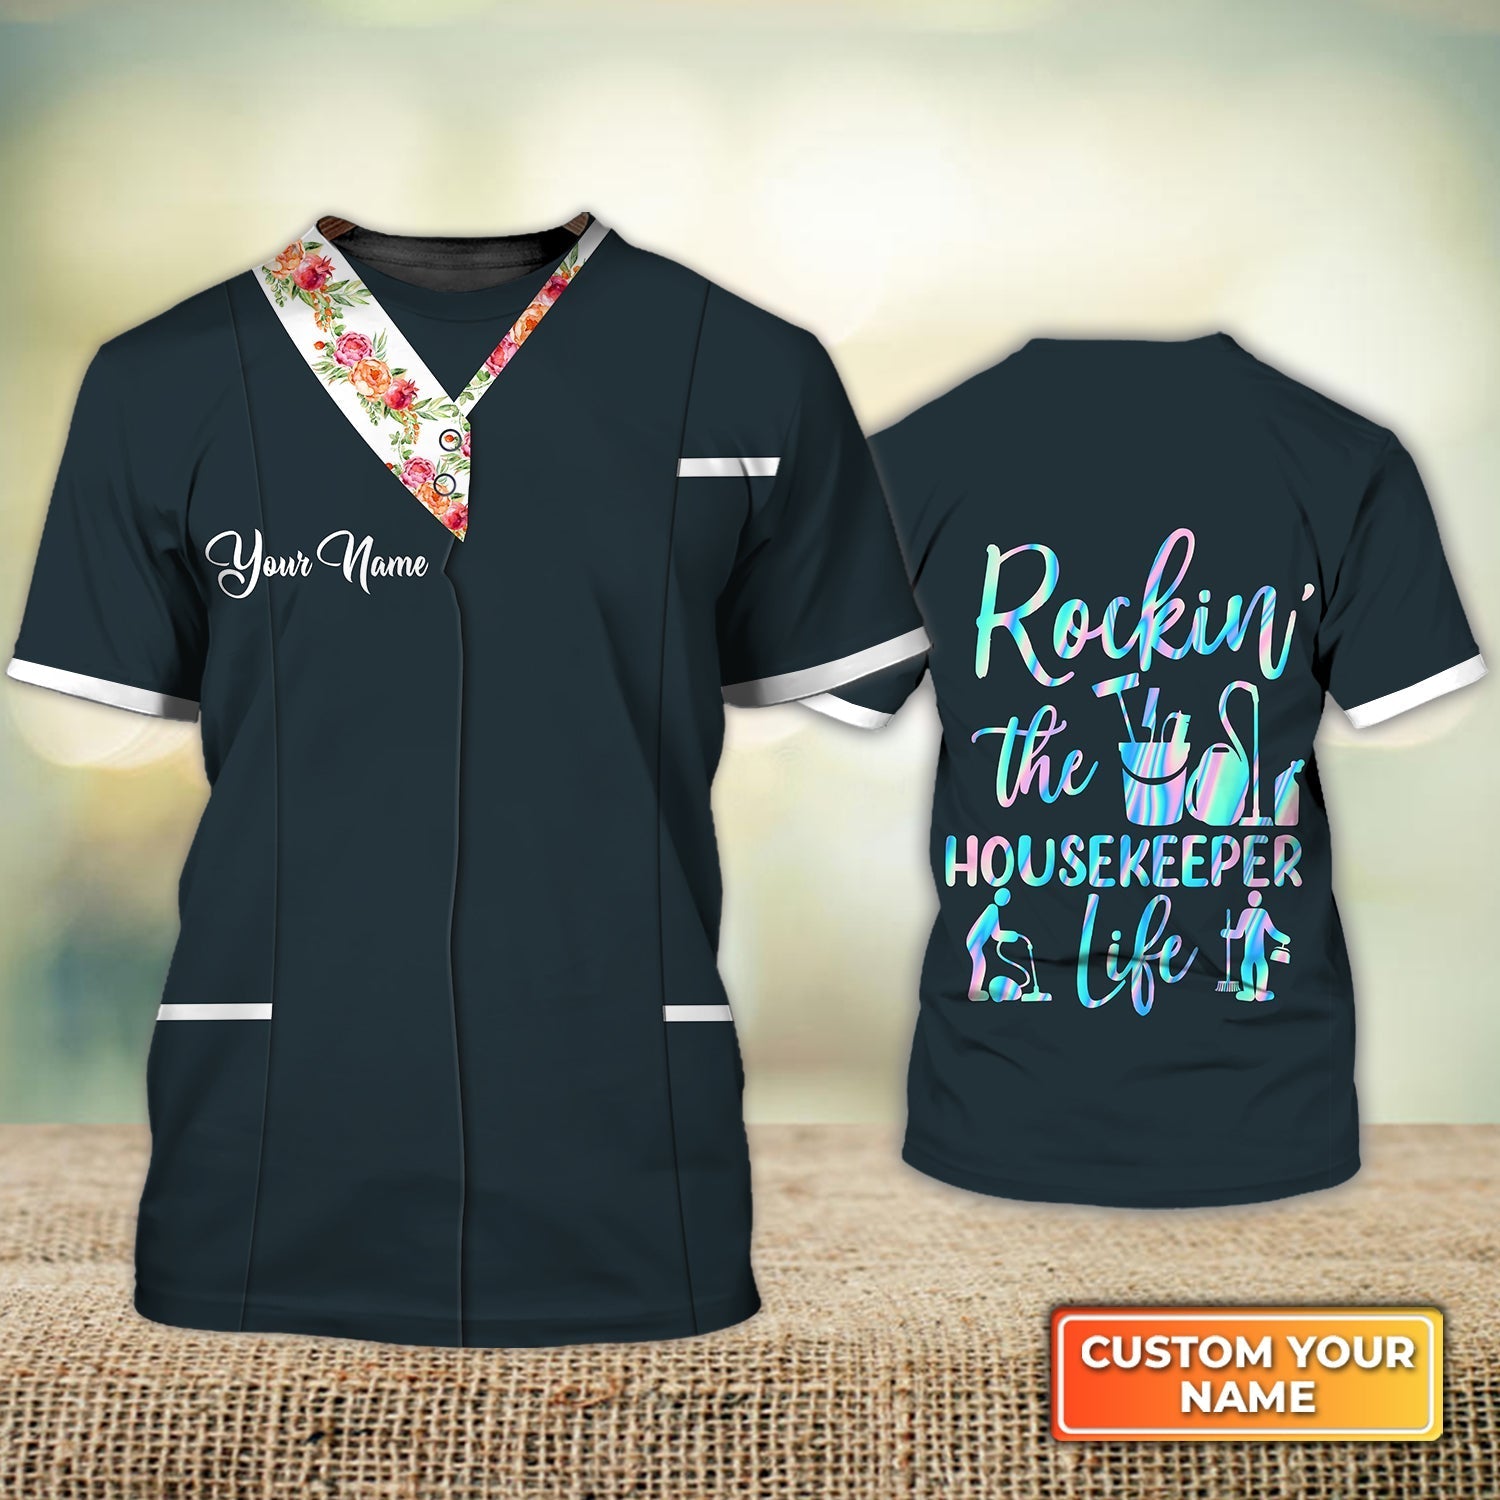 Personalized Name 3D Tshirt For Housekeeper Rockin'' The Housekeeper Life Housekeeping Essential Housekeeper Uniform